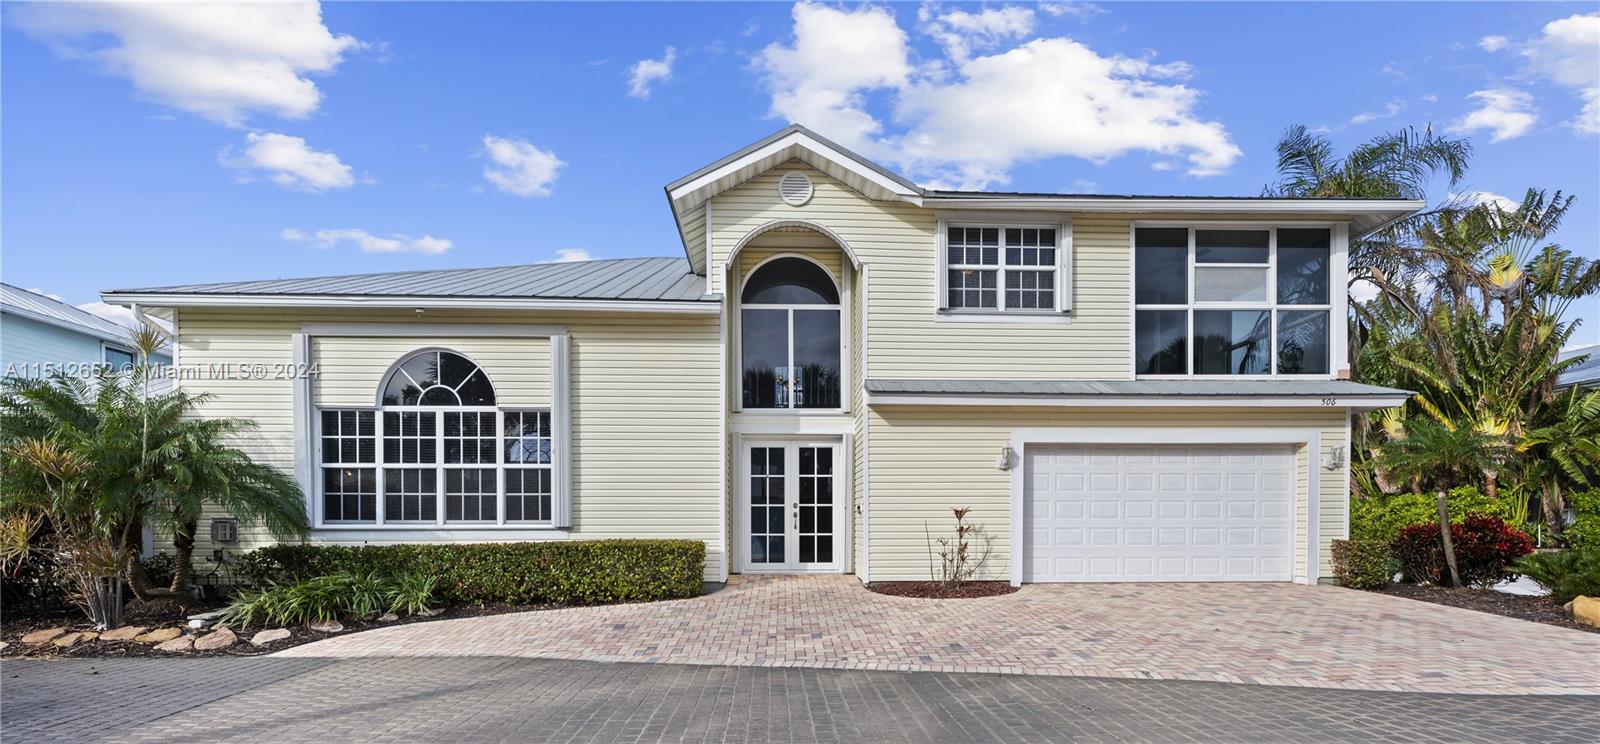 Property for Sale at 506 Xanadu Pl, Jupiter, Palm Beach County, Florida - Bedrooms: 4 
Bathrooms: 3  - $1,599,888